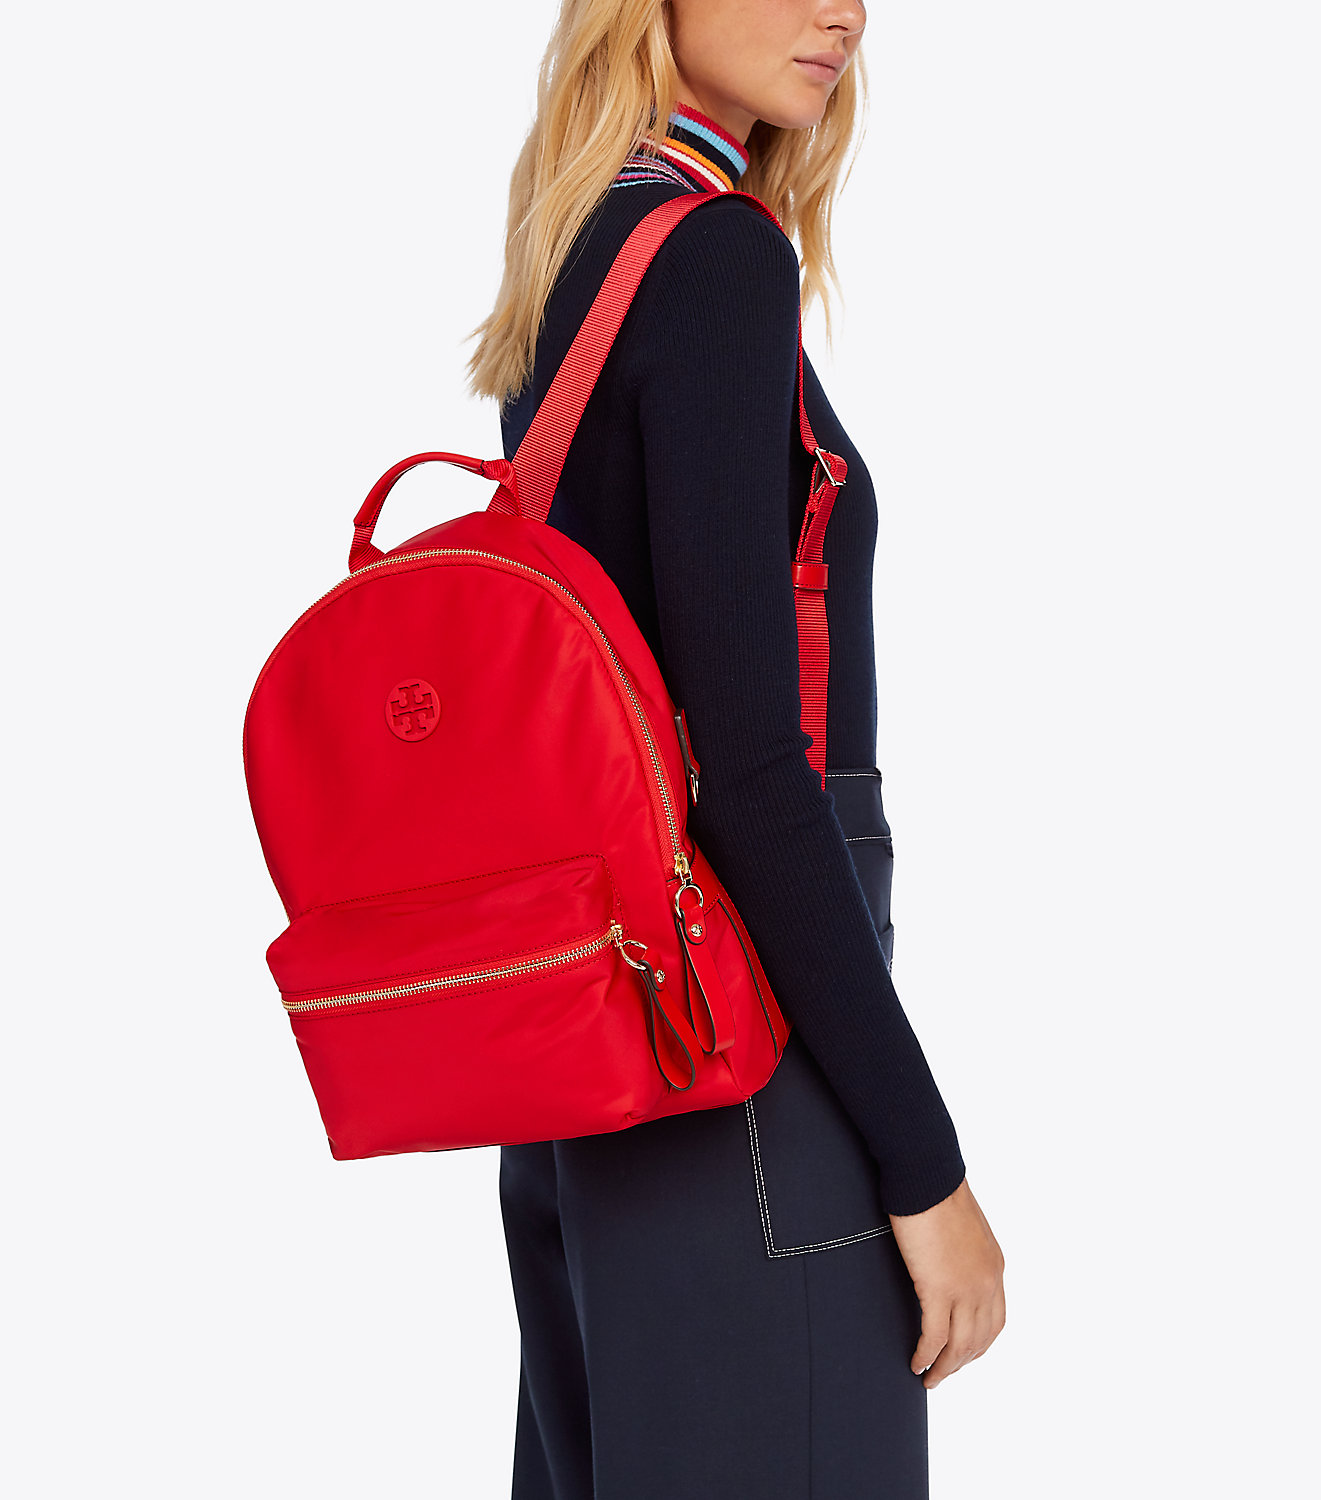 TORY BURCH TORY BURCH Tilda Nylon Backpack BRILLIANT RED |